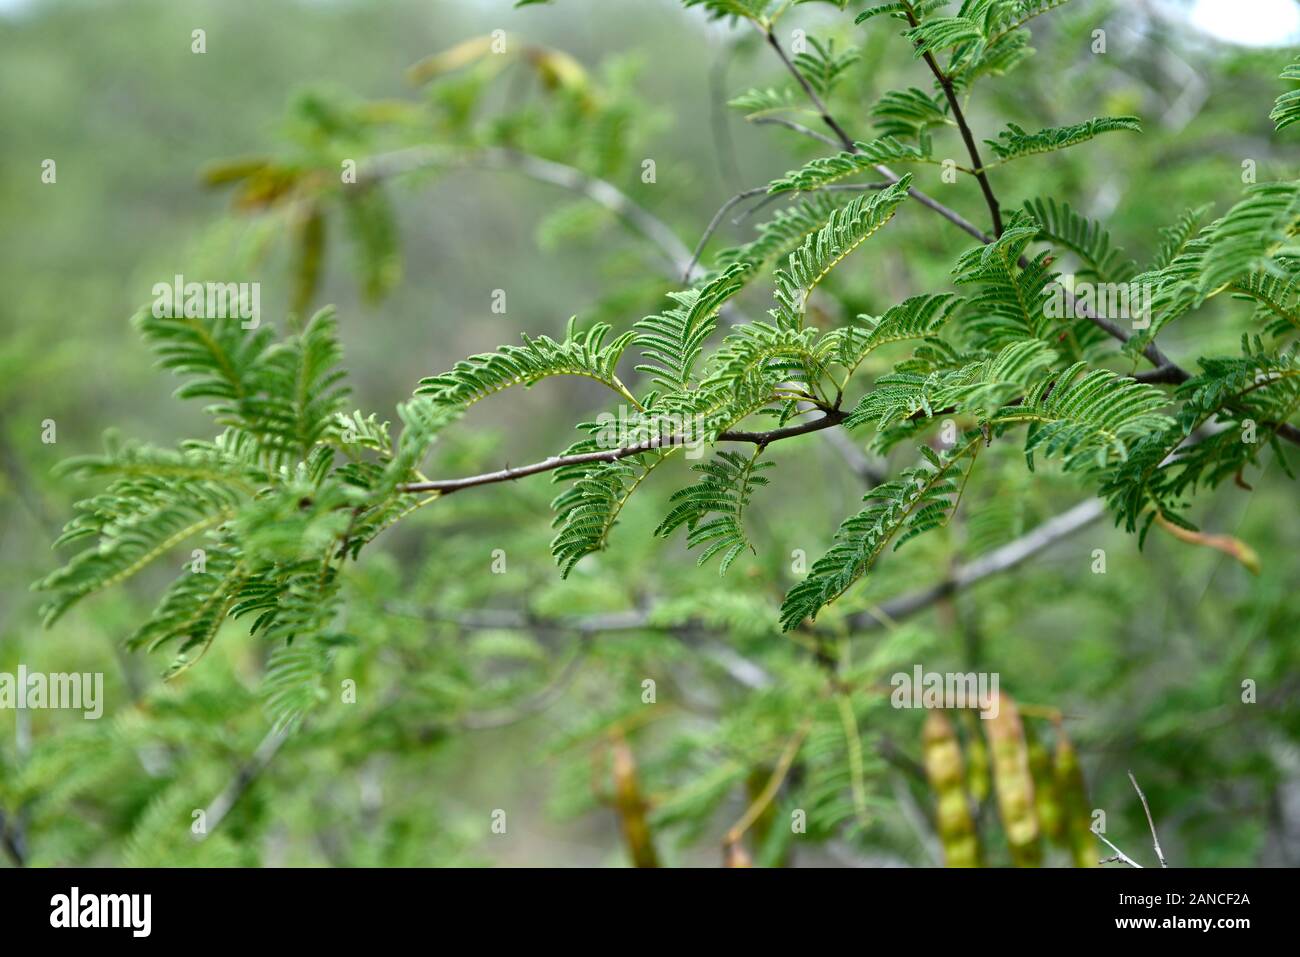 Acacia hereroensis,mountain thorn,green leaves,foliage,namibian native tree,trees,plants,plant,namibia,RM floral Stock Photo